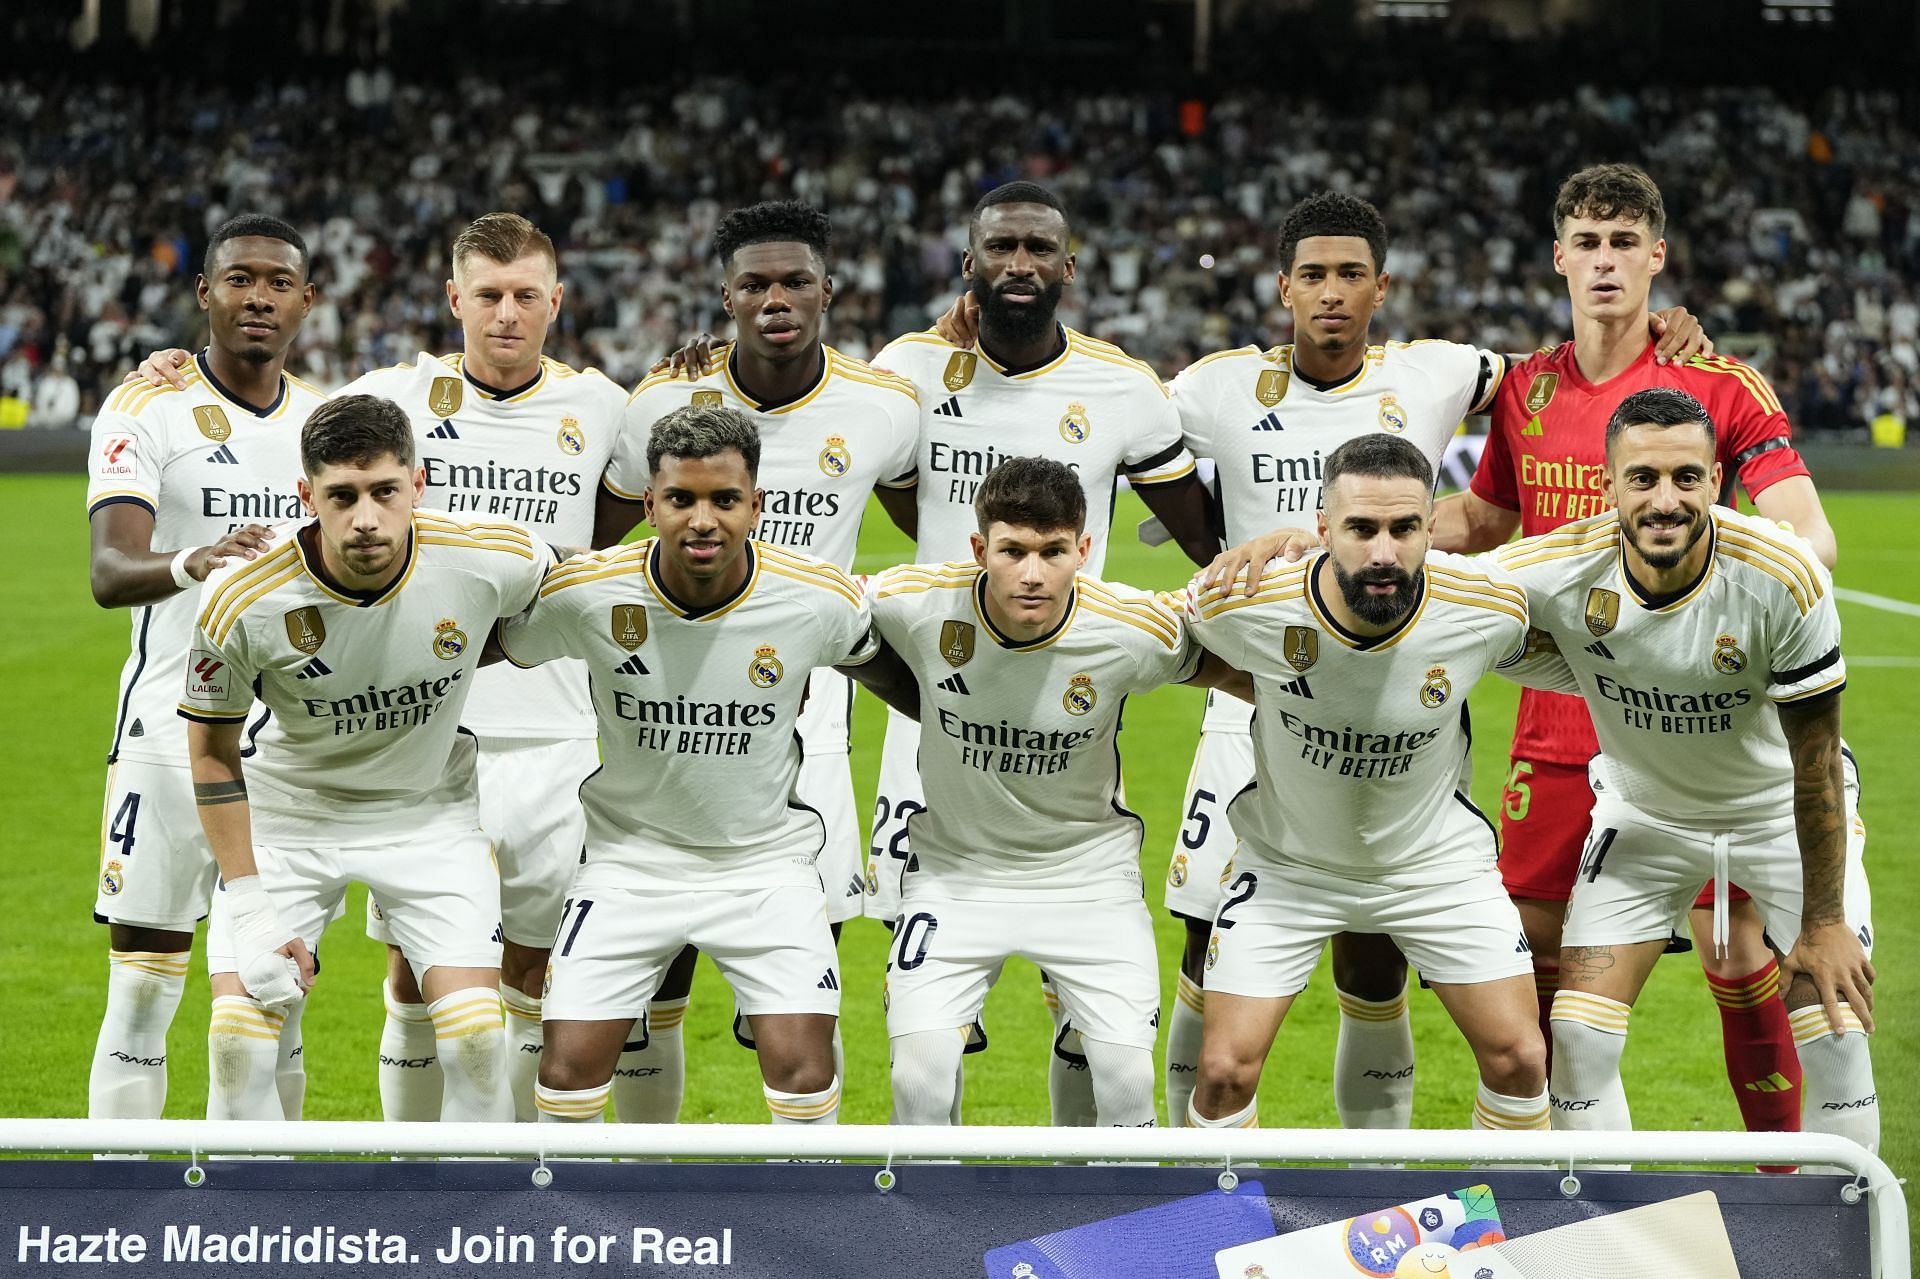 Real Madrid 2-1 Real Sociedad: Carlo Ancelotti's side fight back